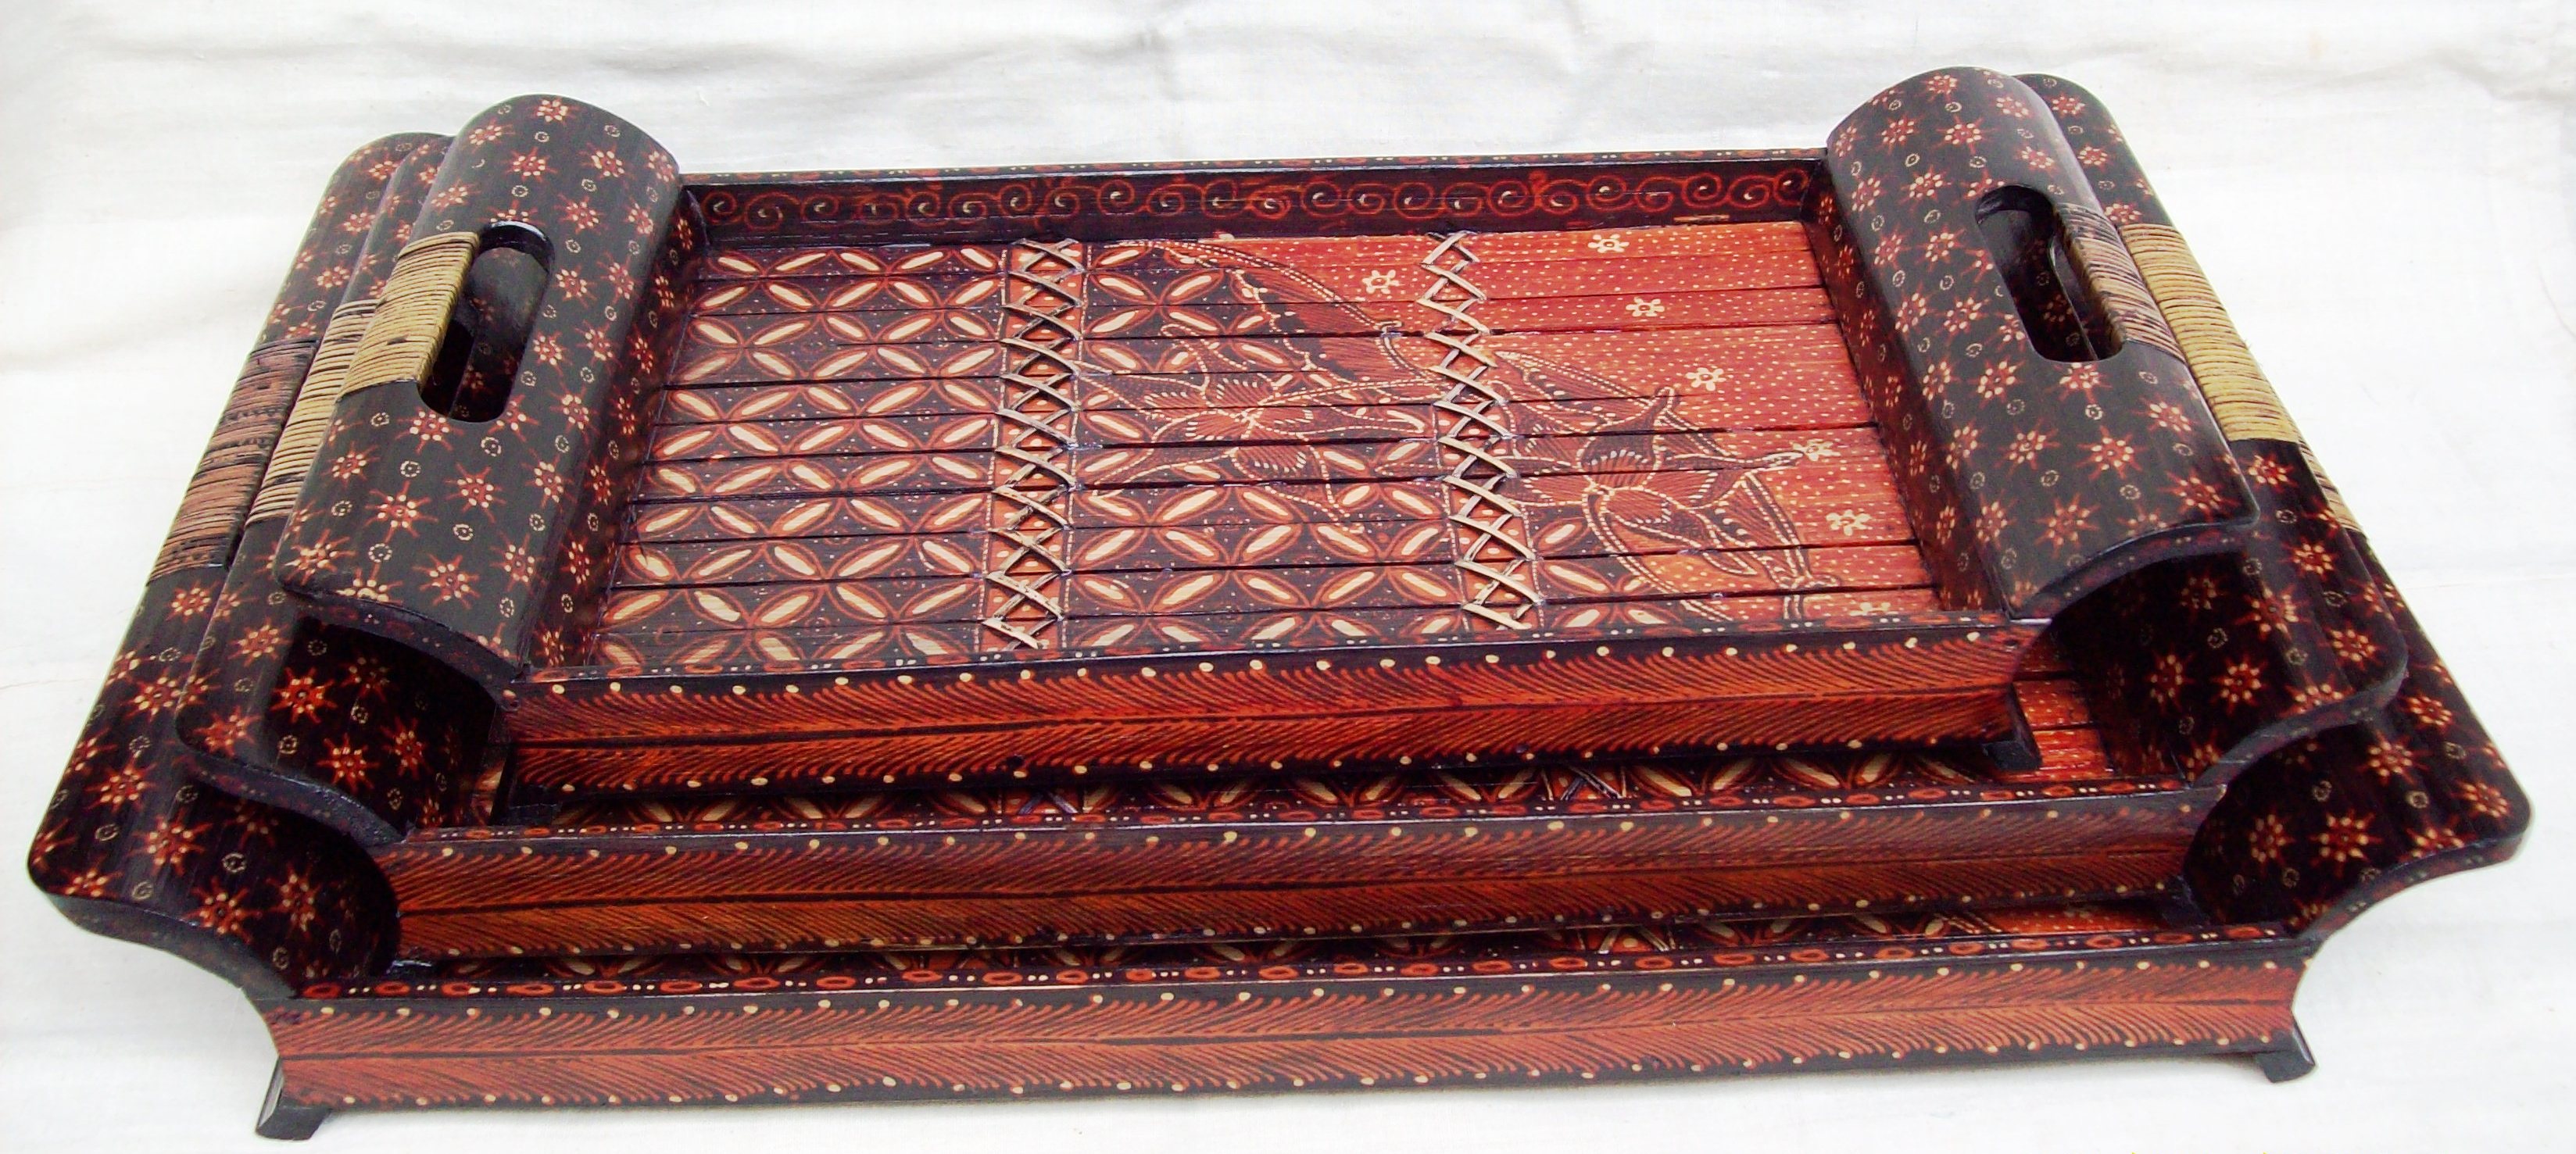 Wooden Batik Decoration & Accessories | Indonesia Batik Corner